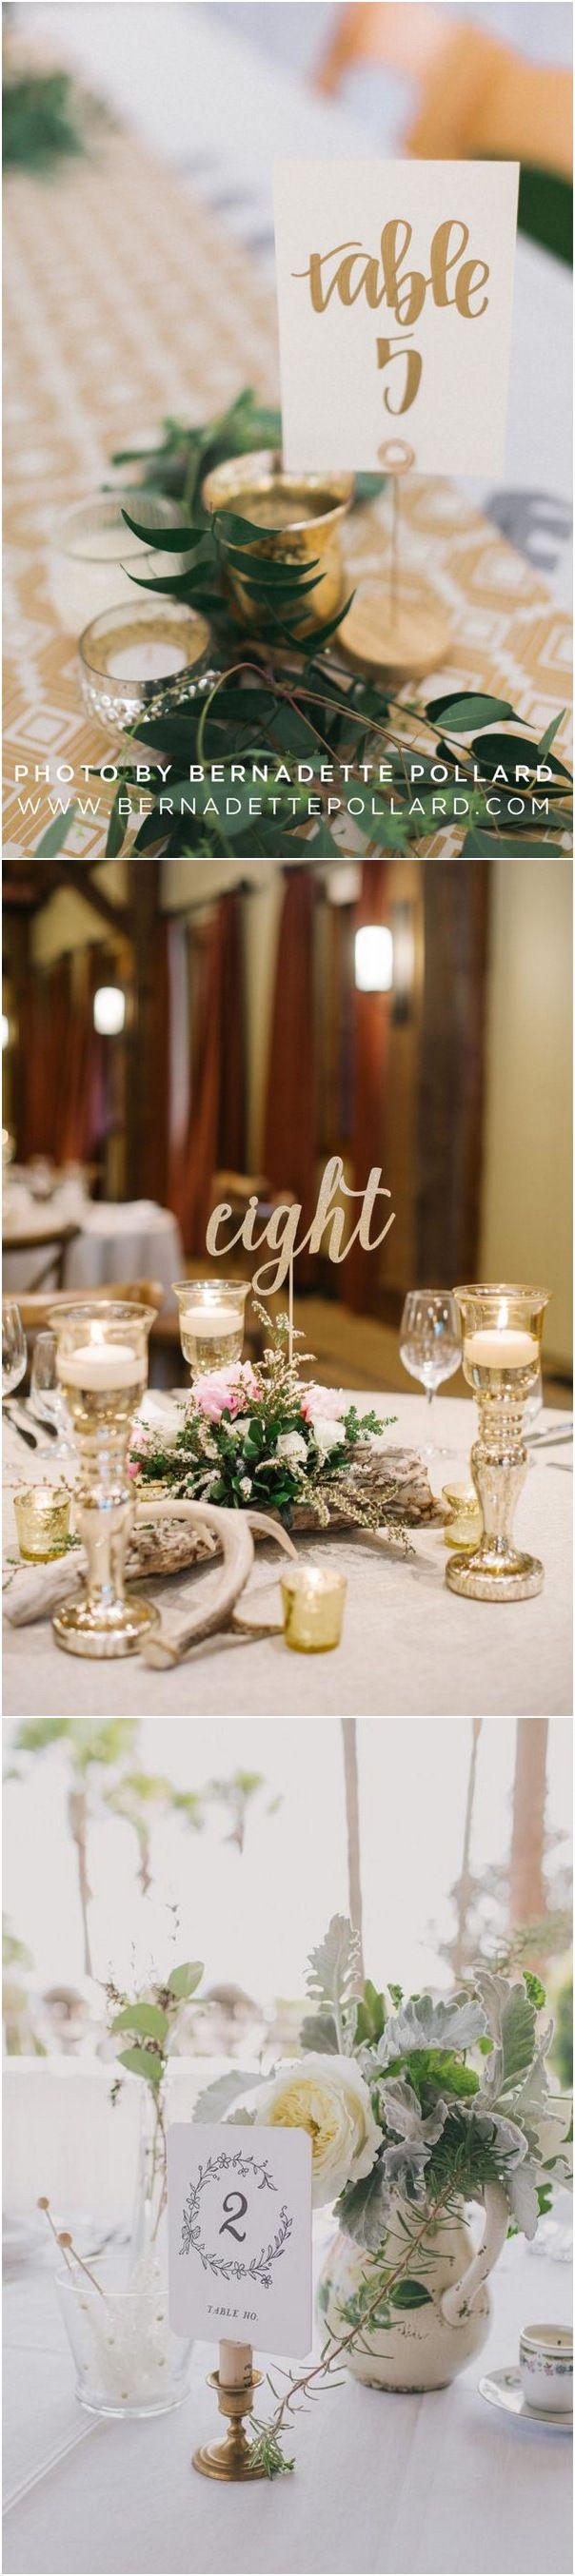 زفاف - 18 Inspiring Wedding Table Number Ideas To Love